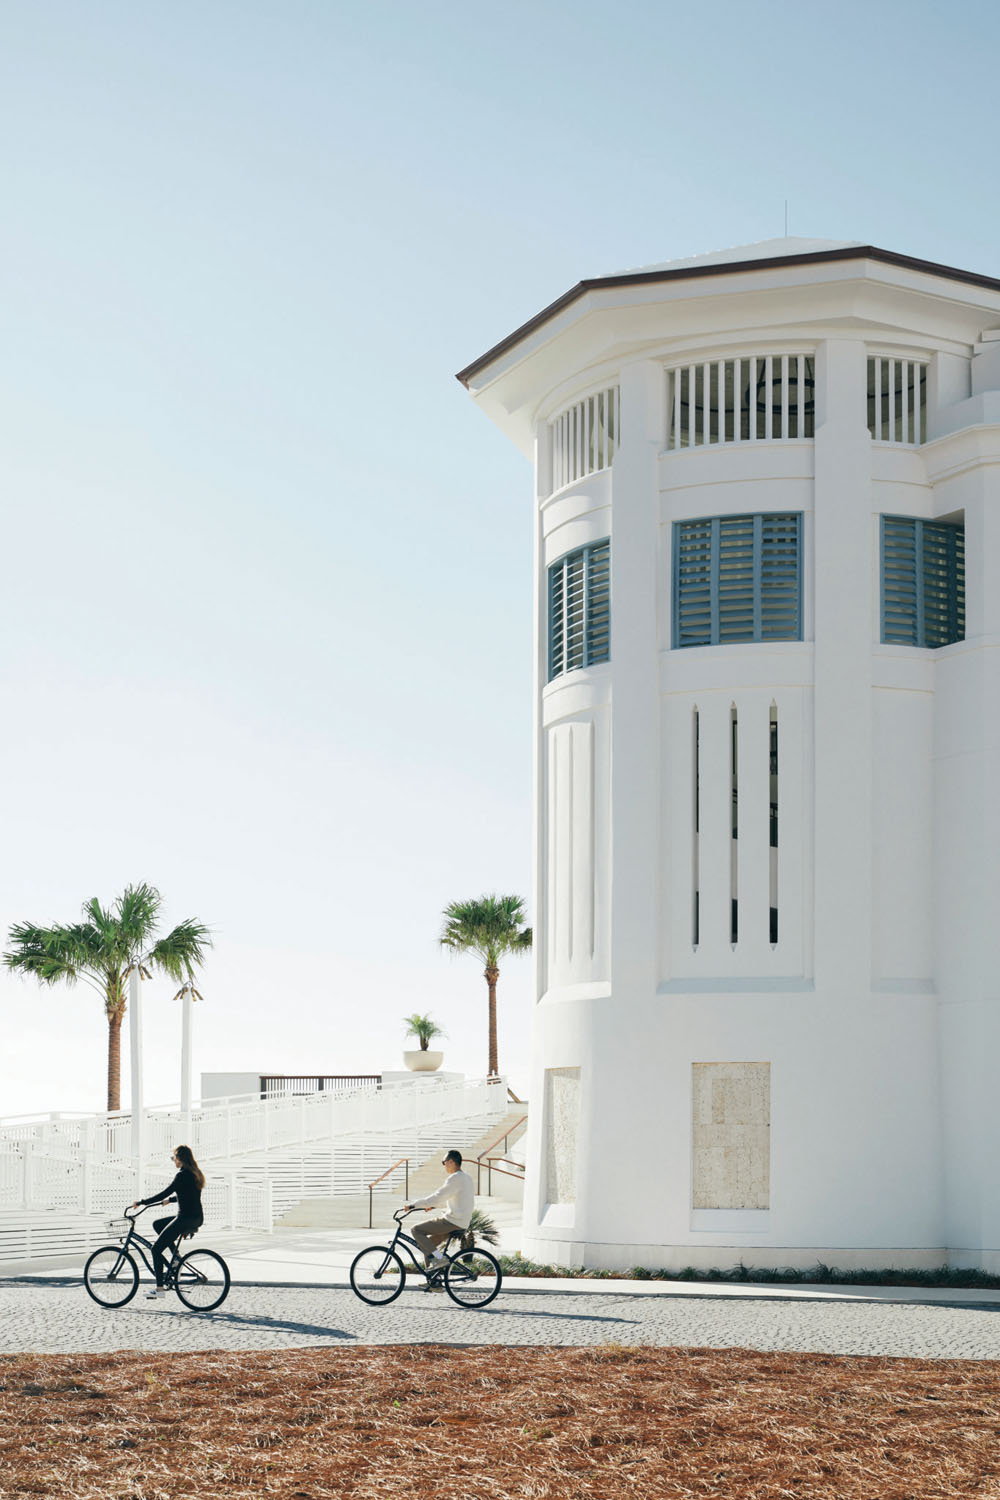 White Bermuda Style Architecture with Turret